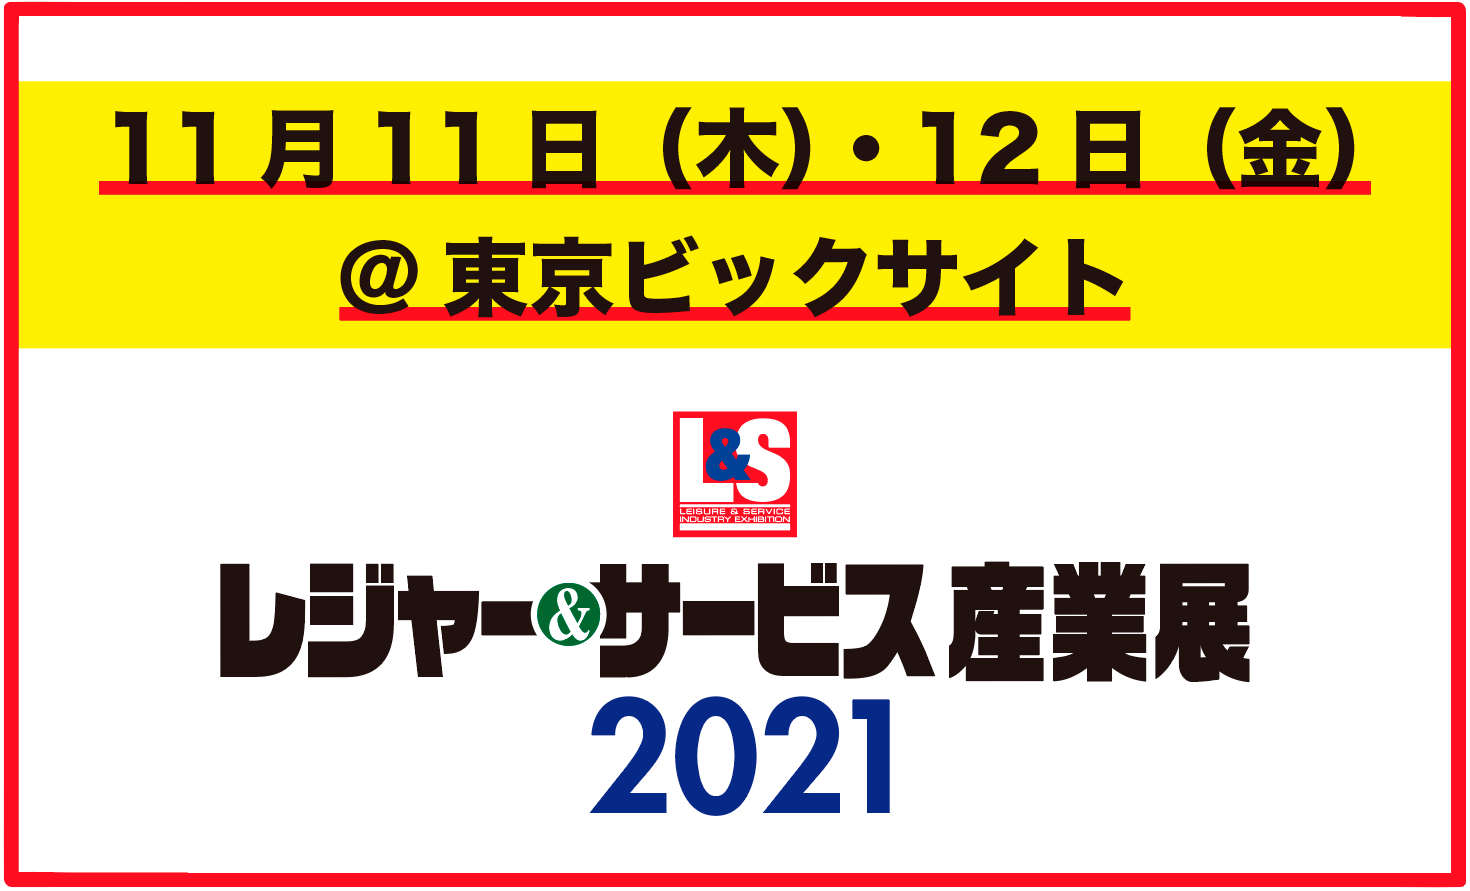 No.05「低価格工法のセミナー出ます」11 月 11 日(木)・ 12 日(金)@東京ビックサイト♯店舗開発を止めるな